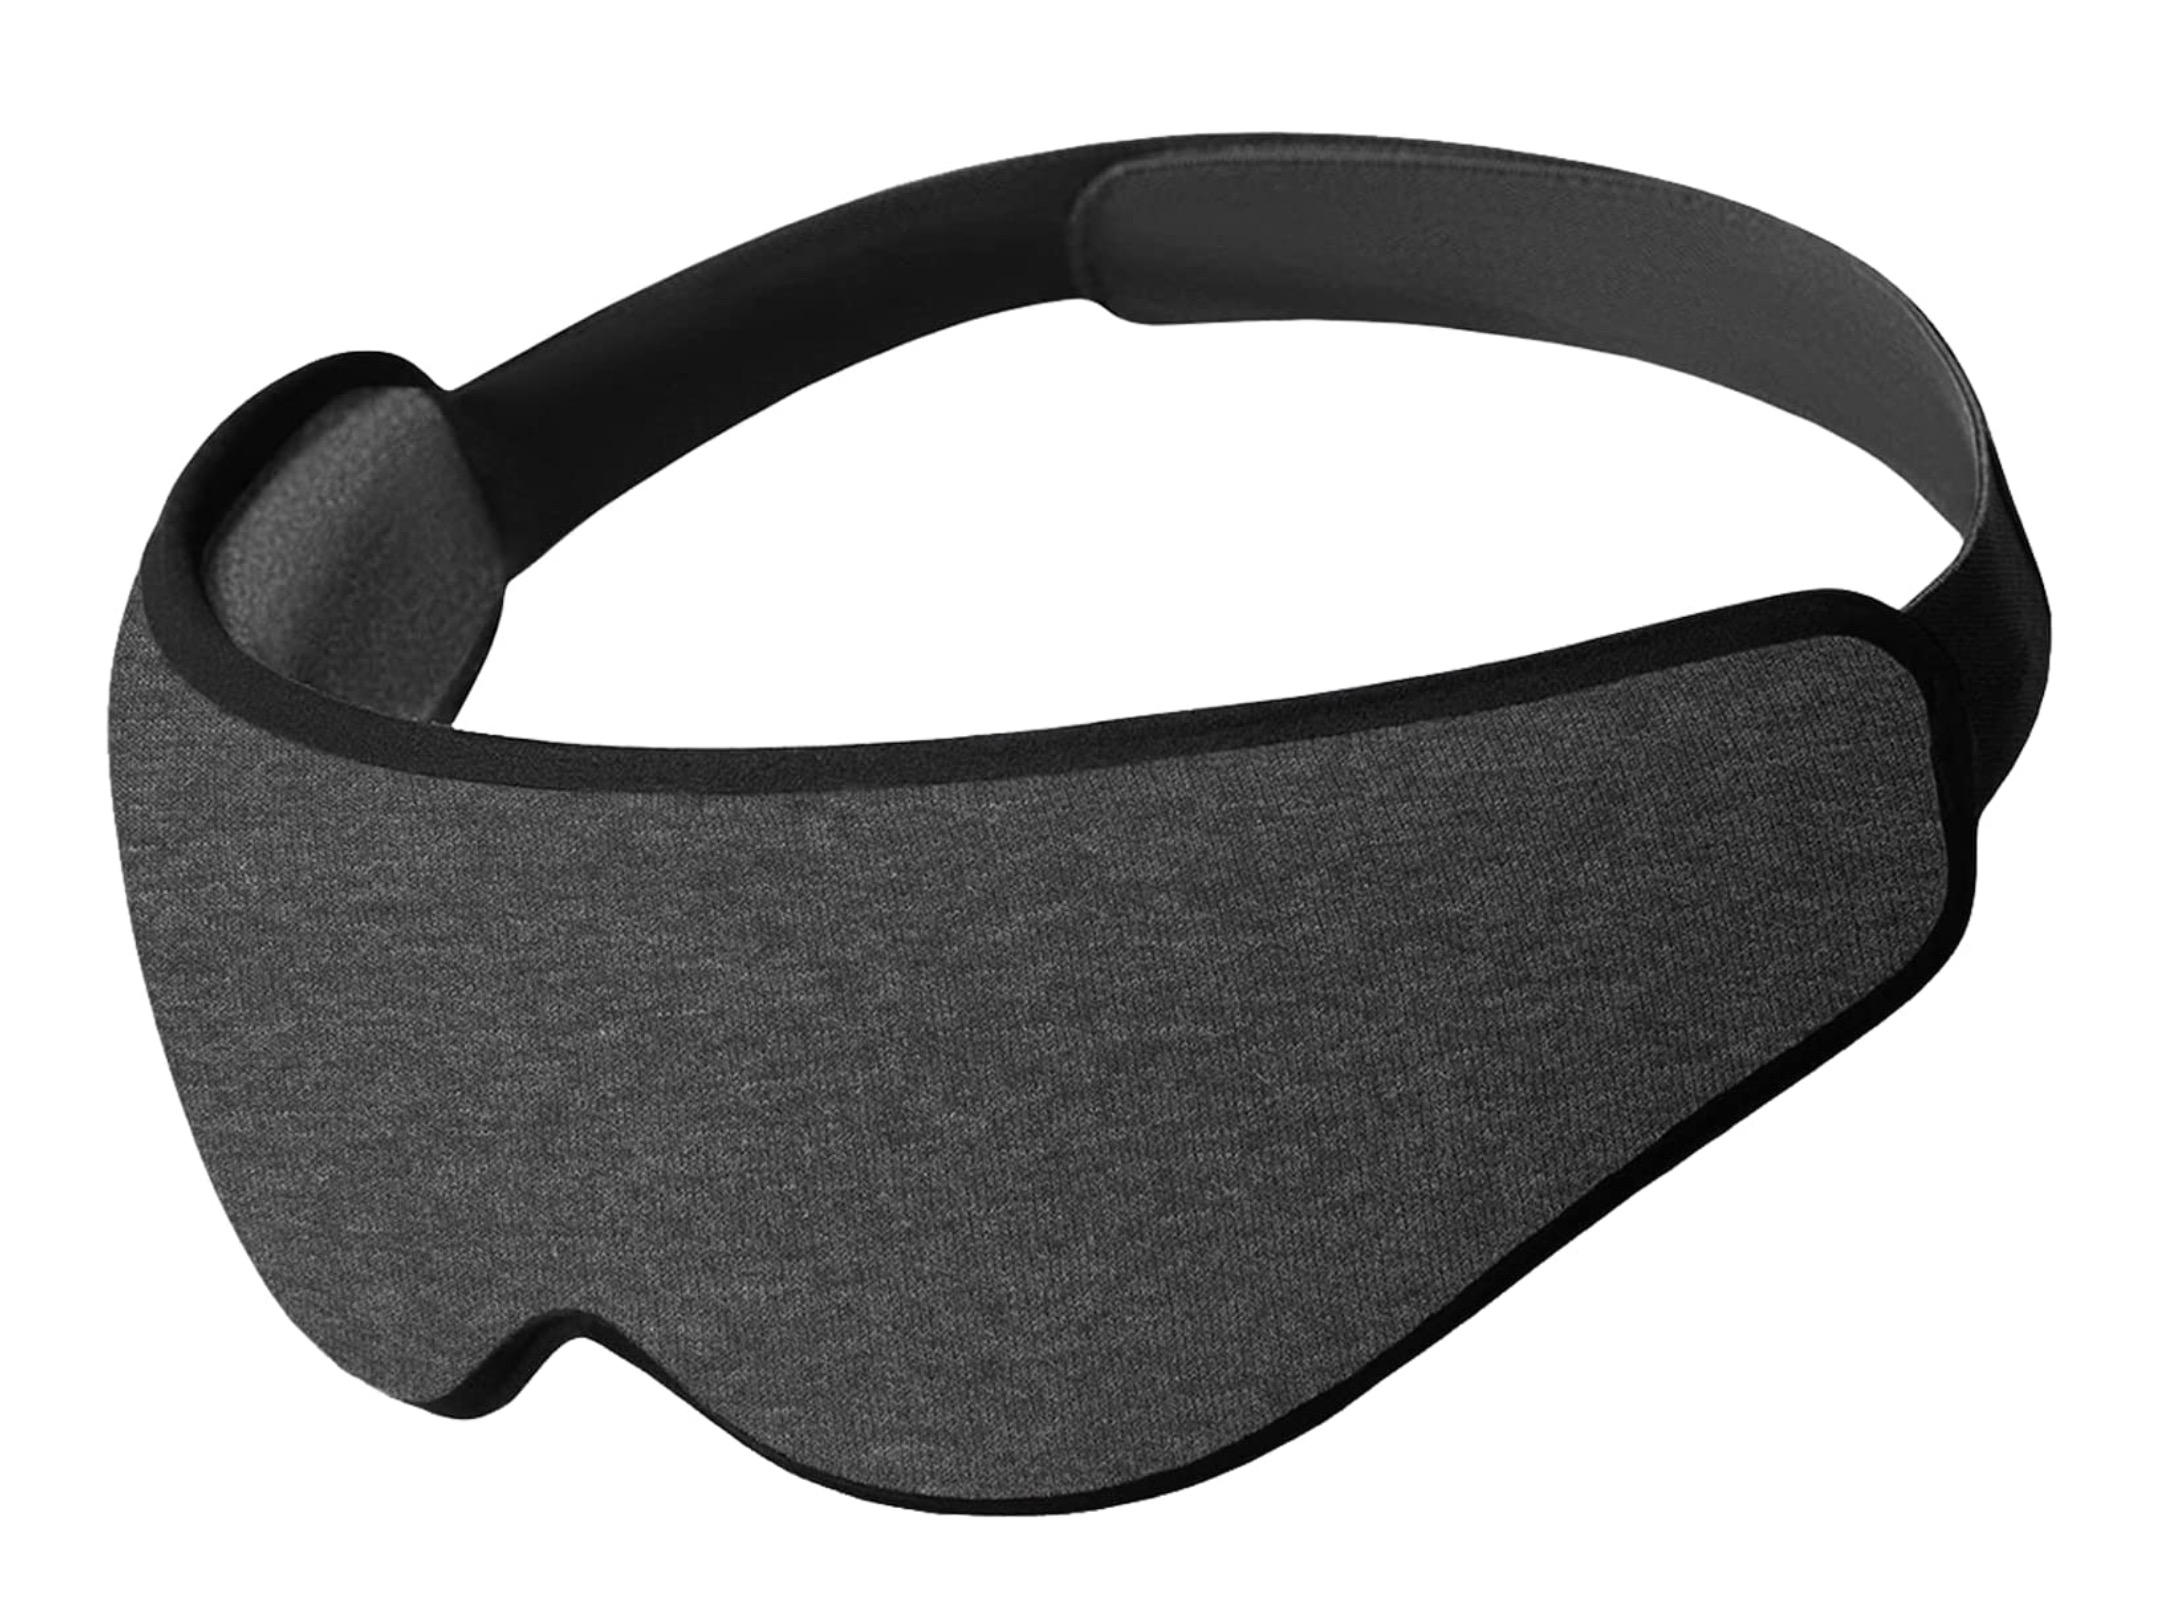 ostrichpillow-3d-ergonomic-blackout-eye-mask